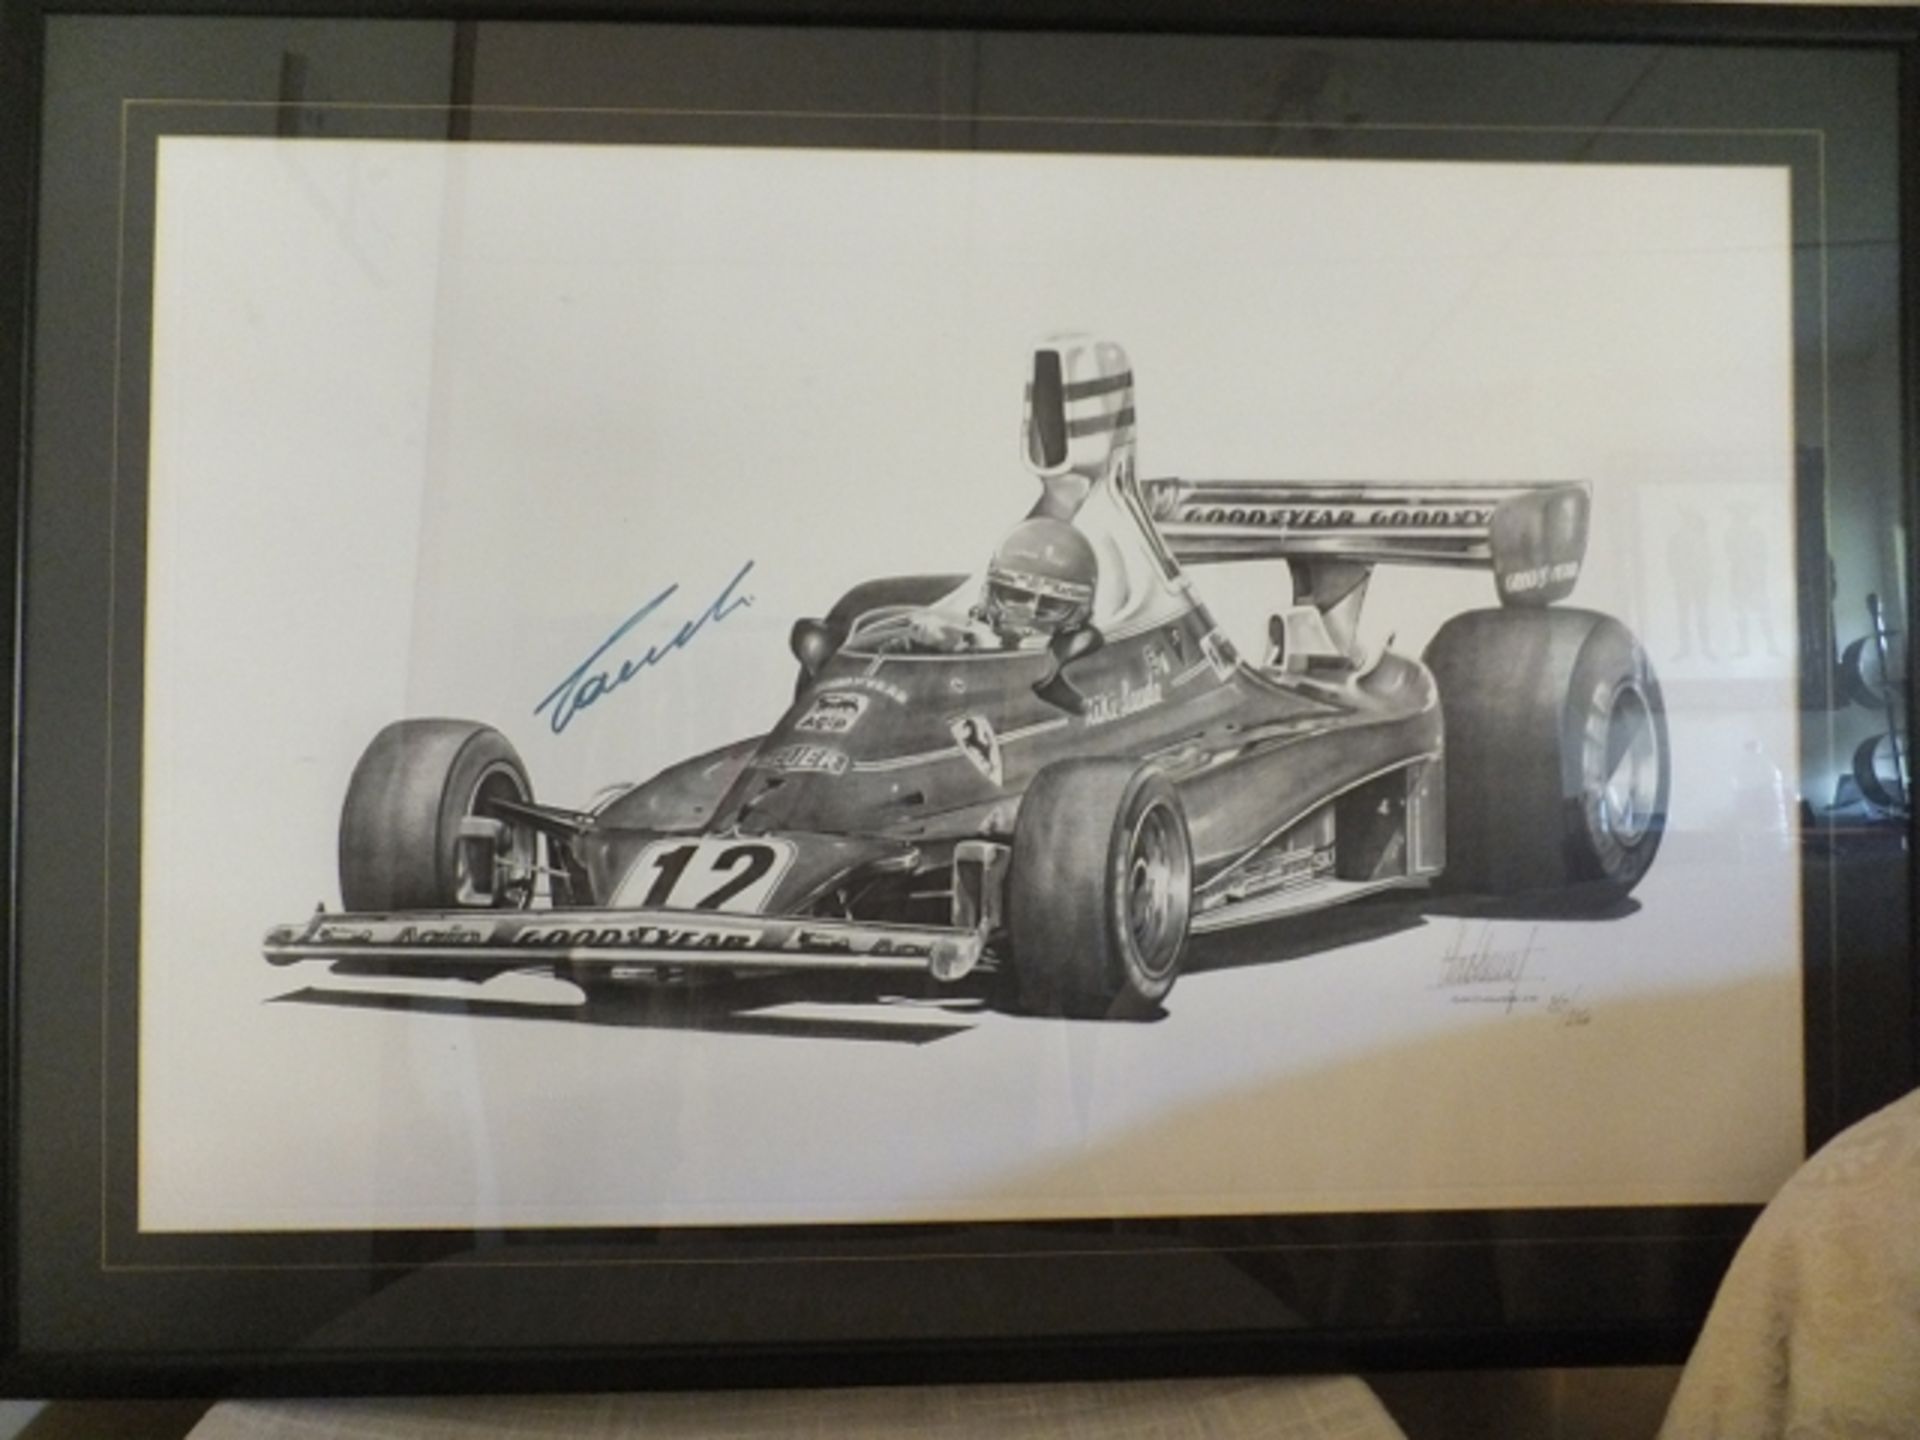 Niki Lauda by Alan Stammers.